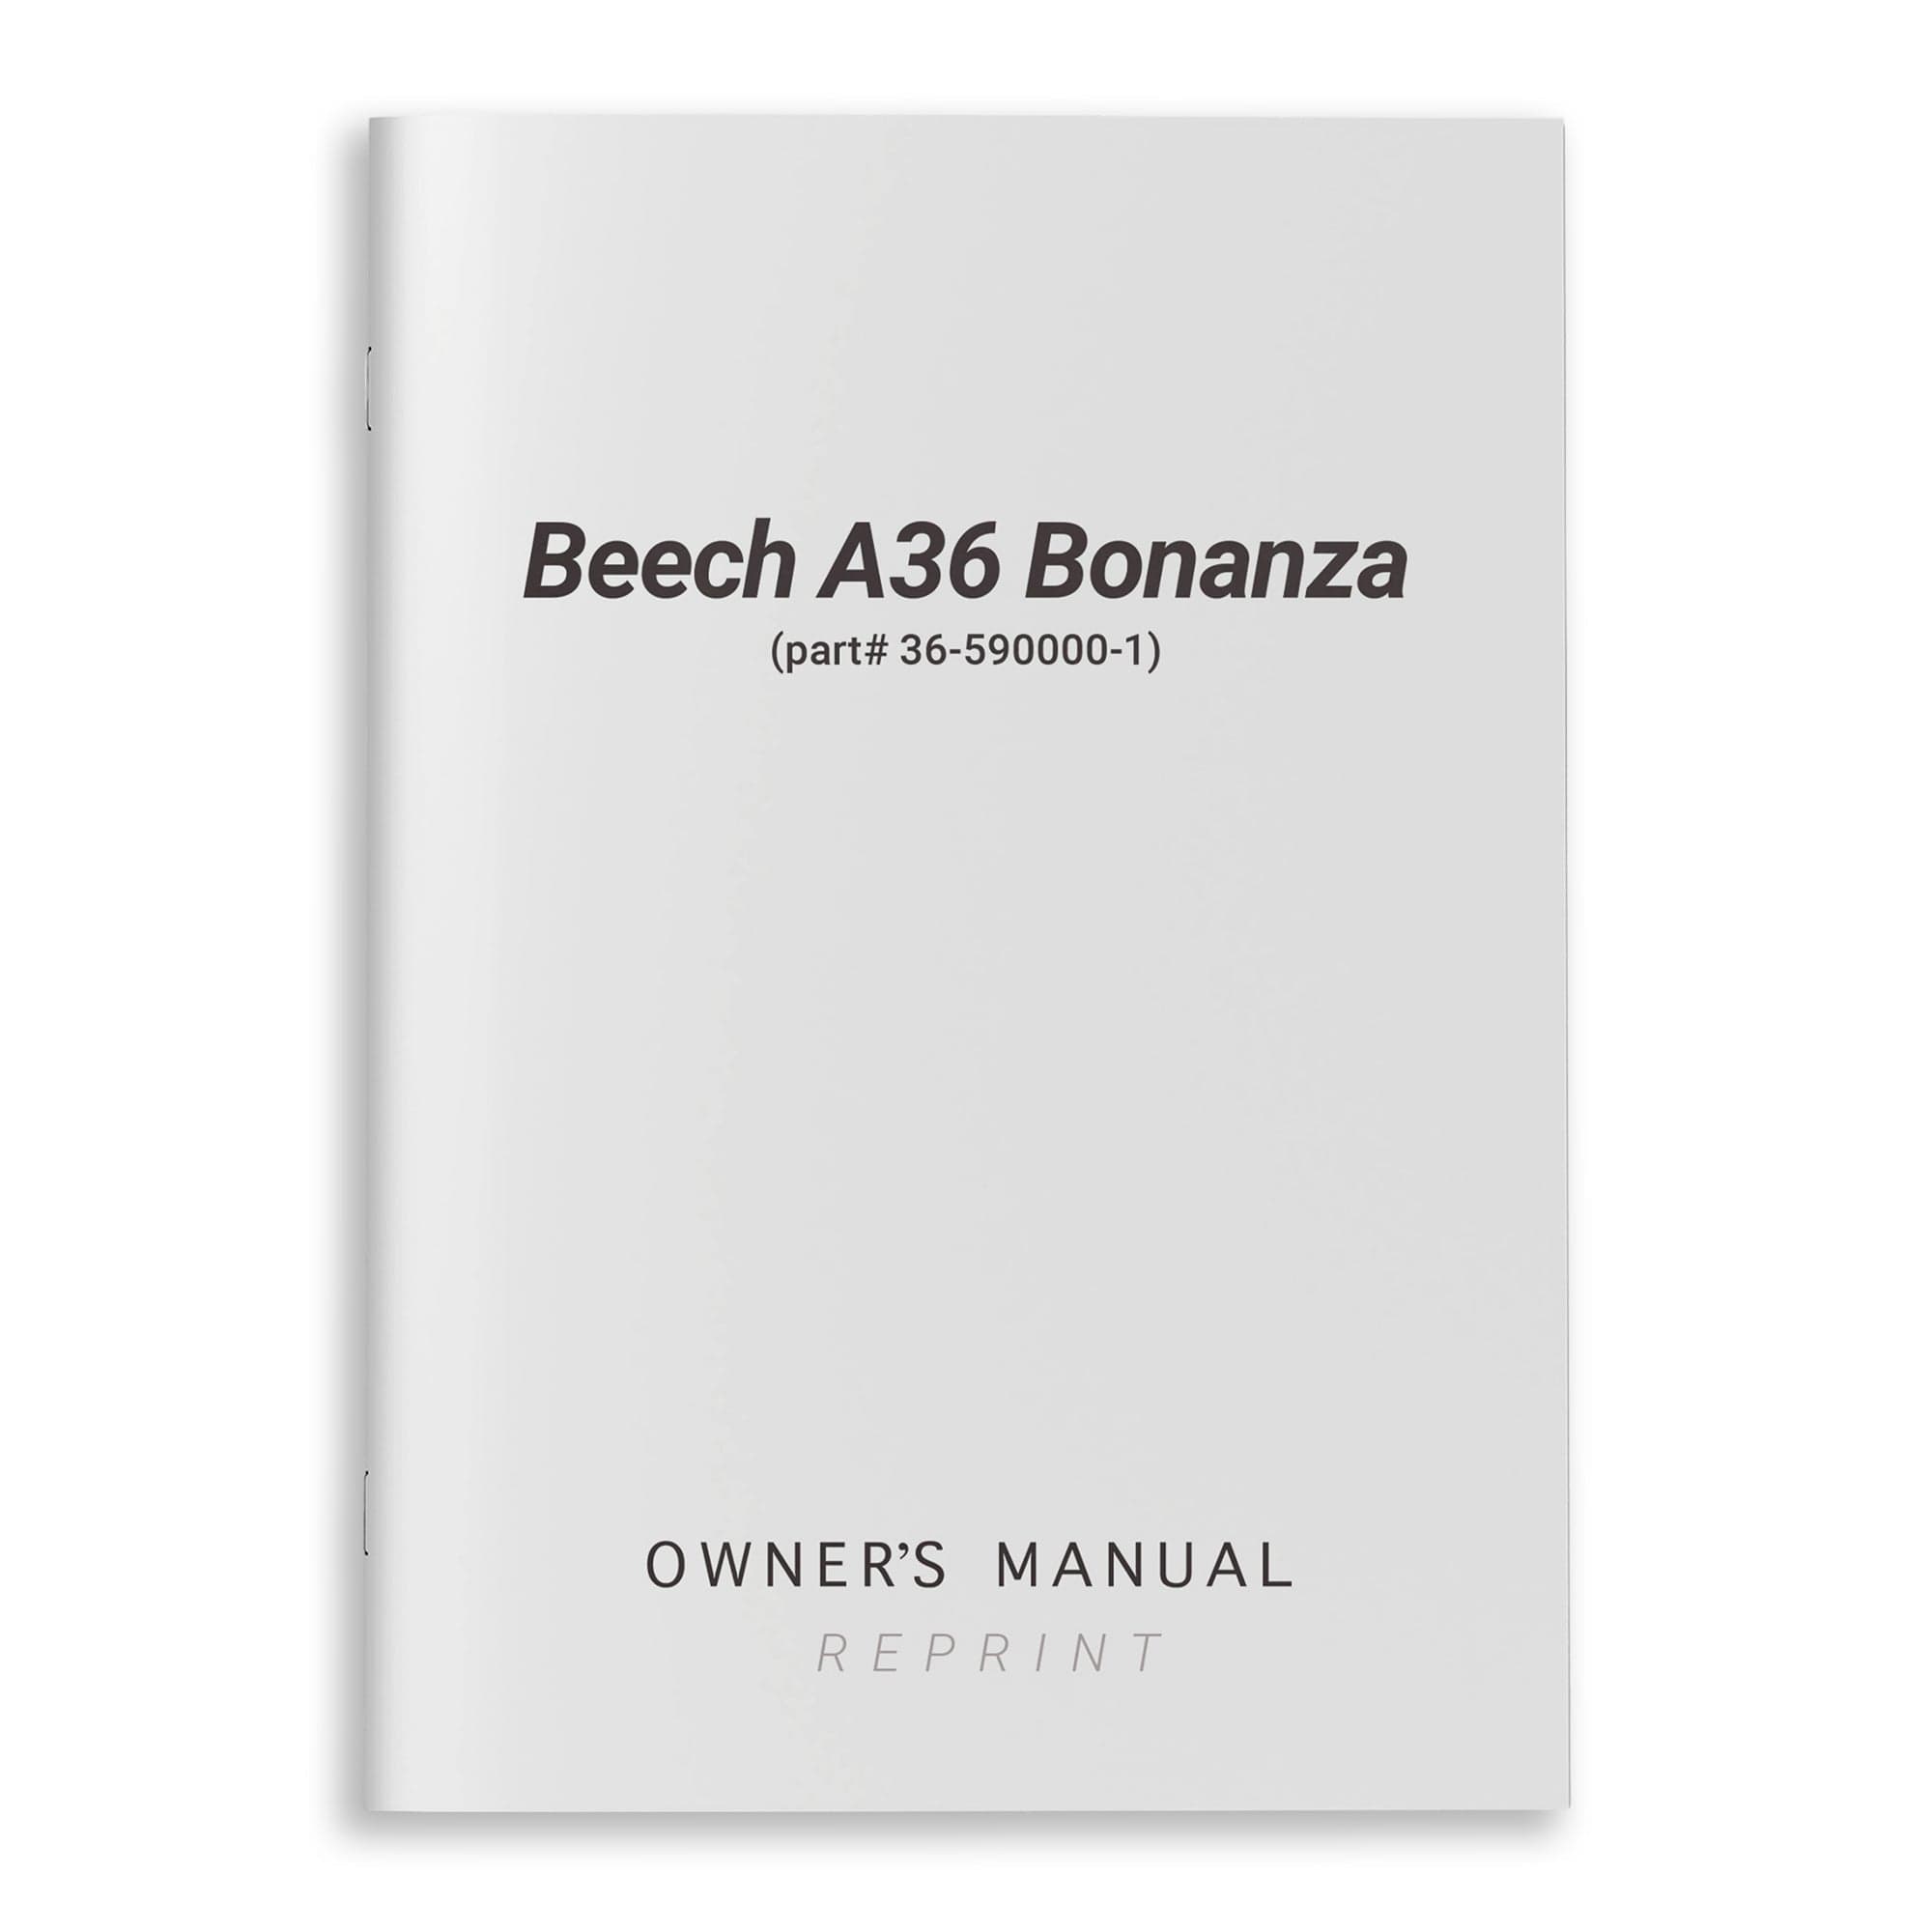 Beech A36 Bonanza Owner's Manual (part# 36-590000-1)